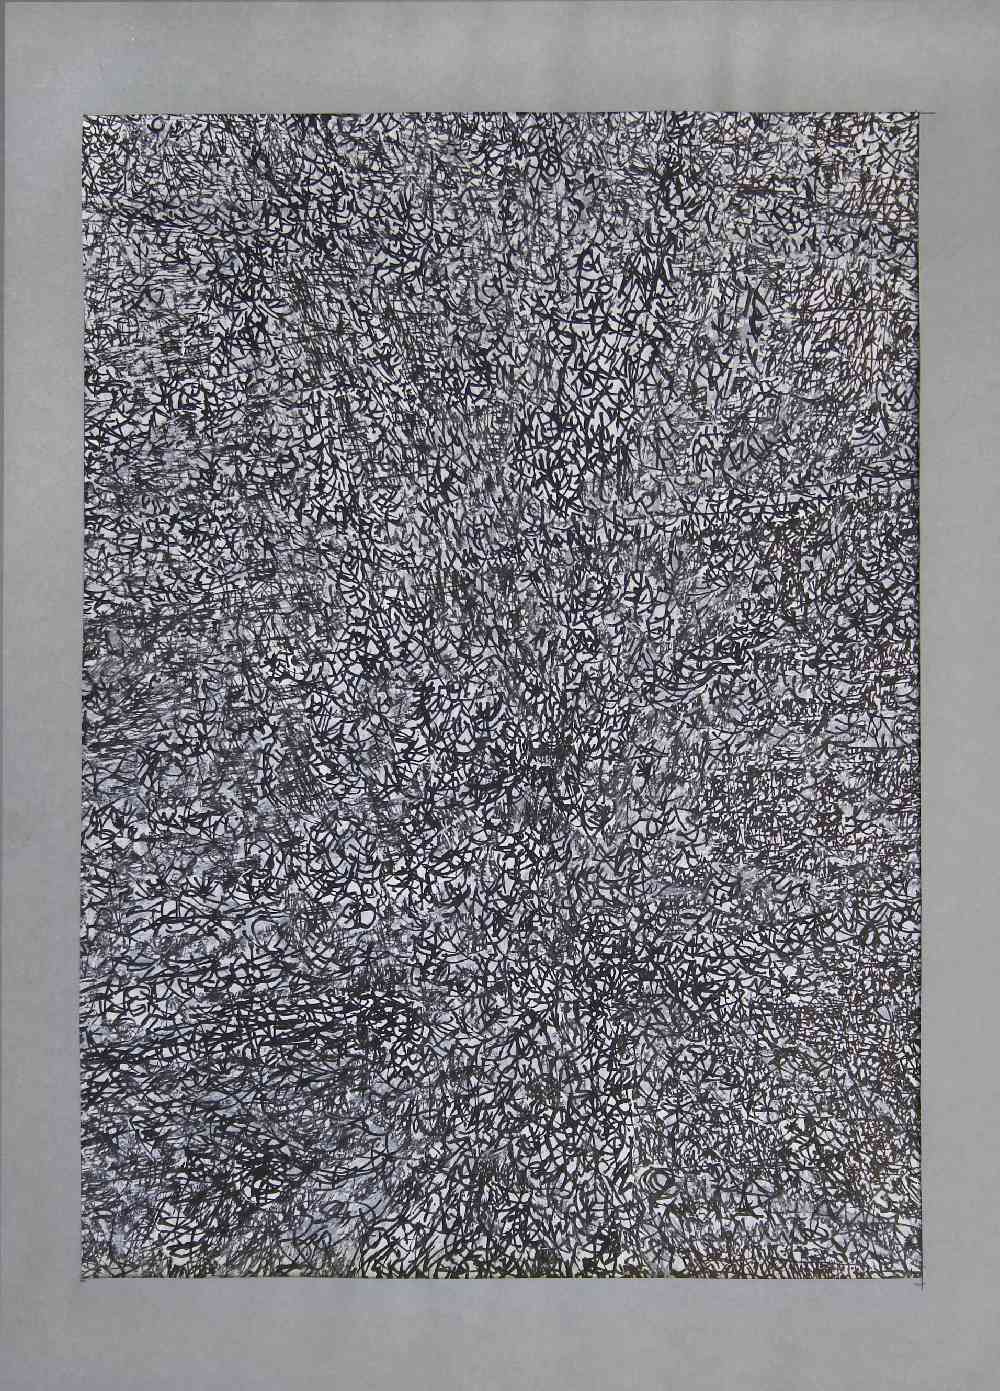 103 - Csorba Simon - Lelle-Gabi, 2003. 30x21cm - Tusrajz 4-19-14